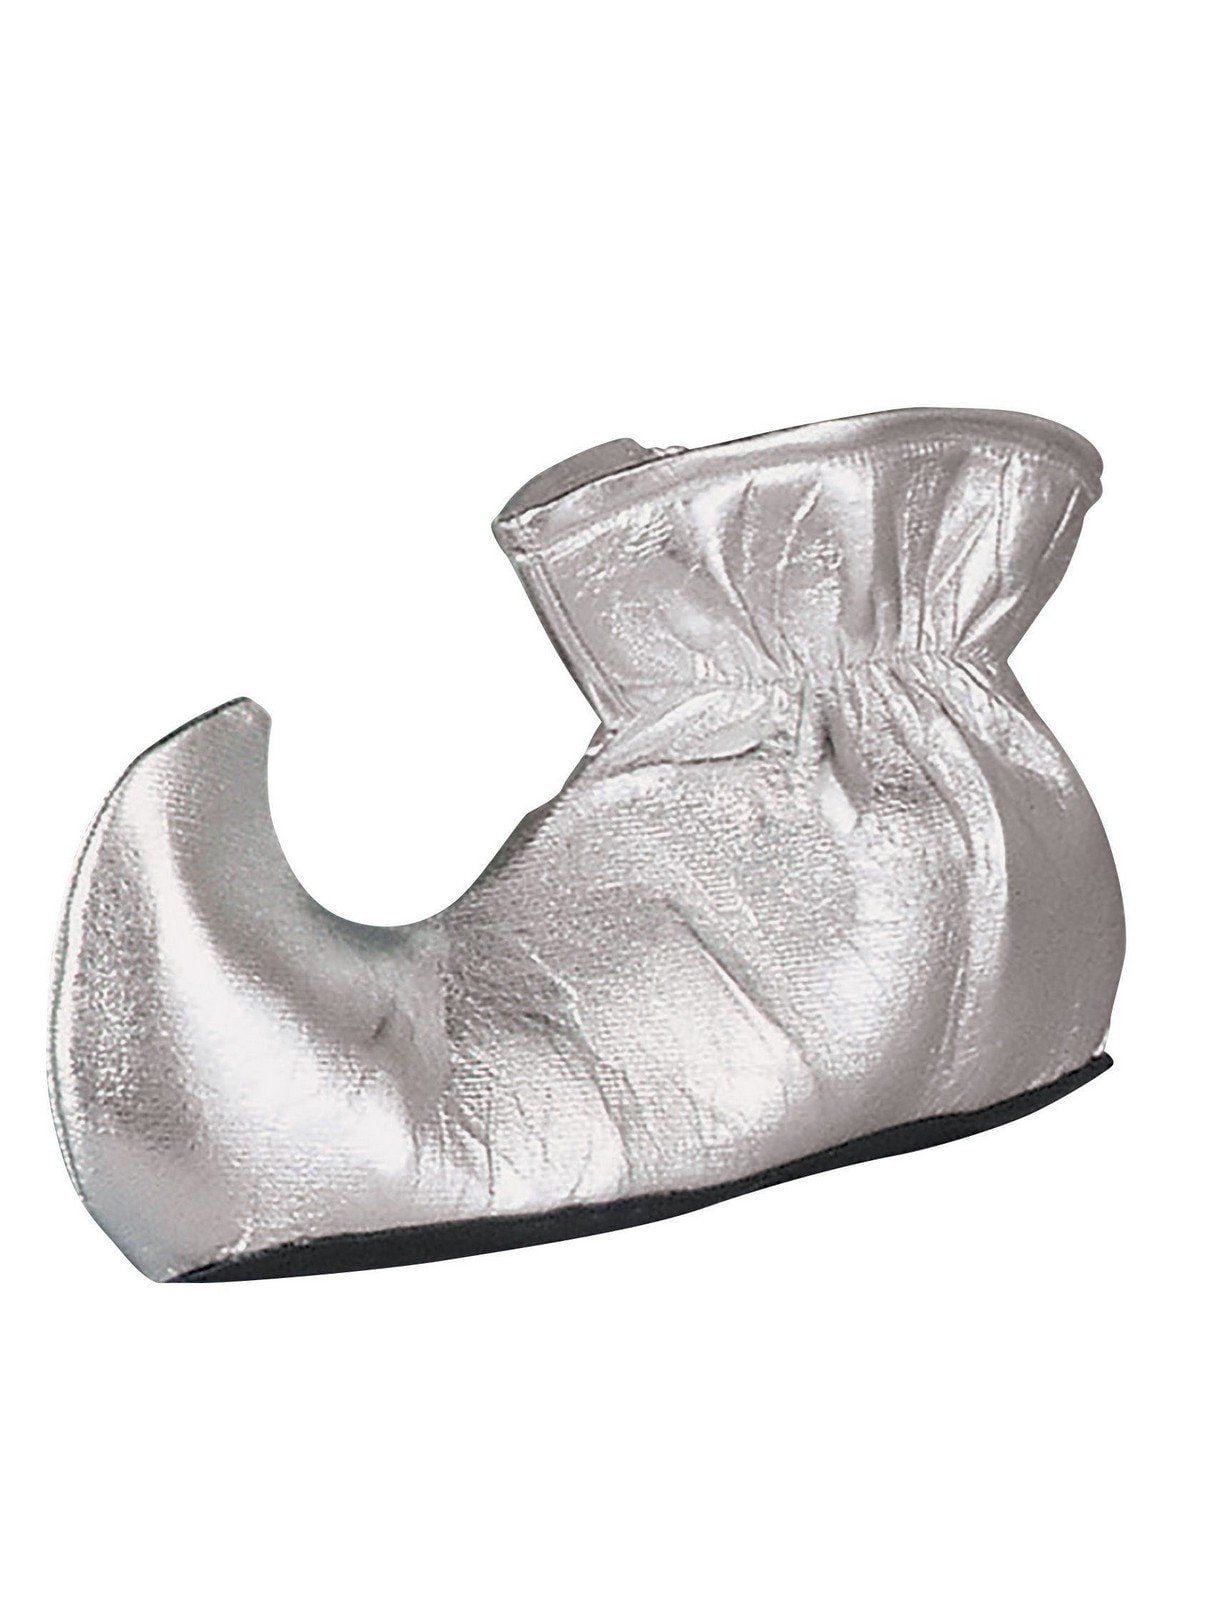 Forum - Silver Elf Shoes - Walmart.com 